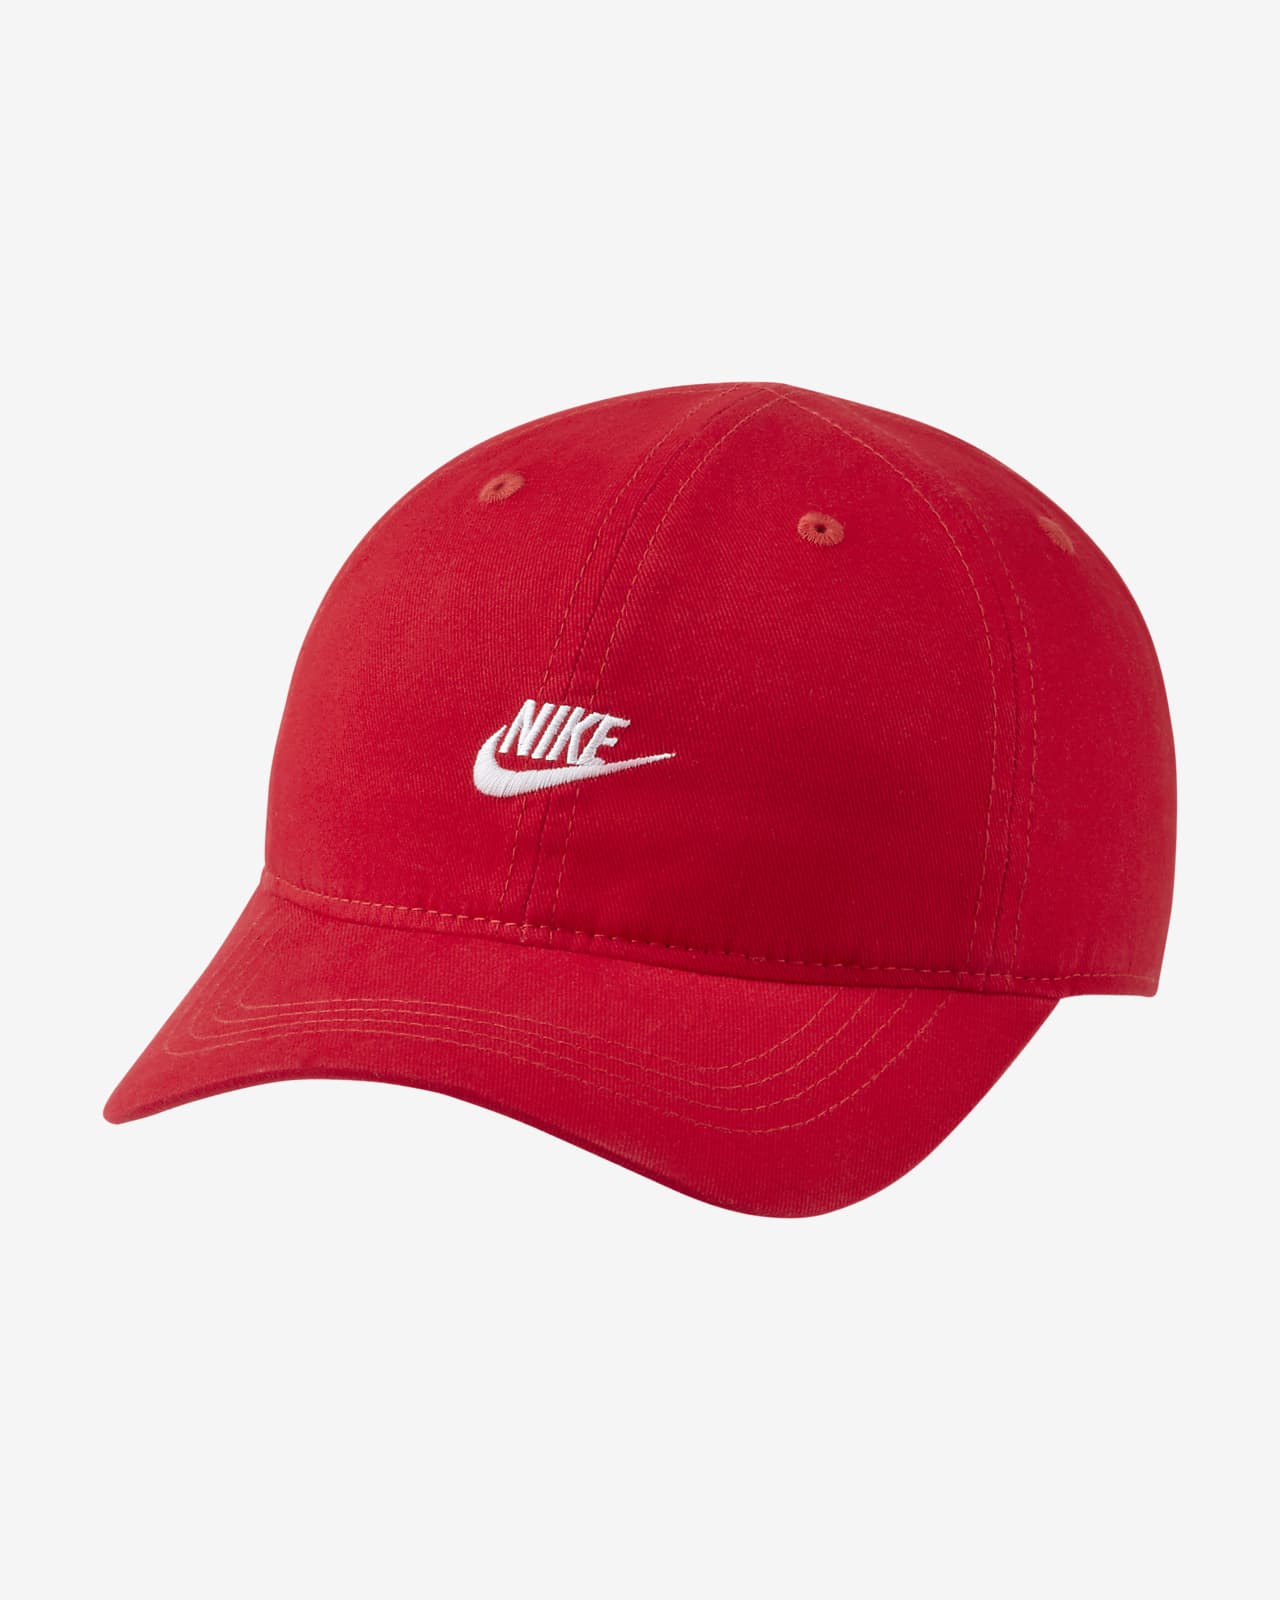 Nike Little Kids' Adjustable Hat